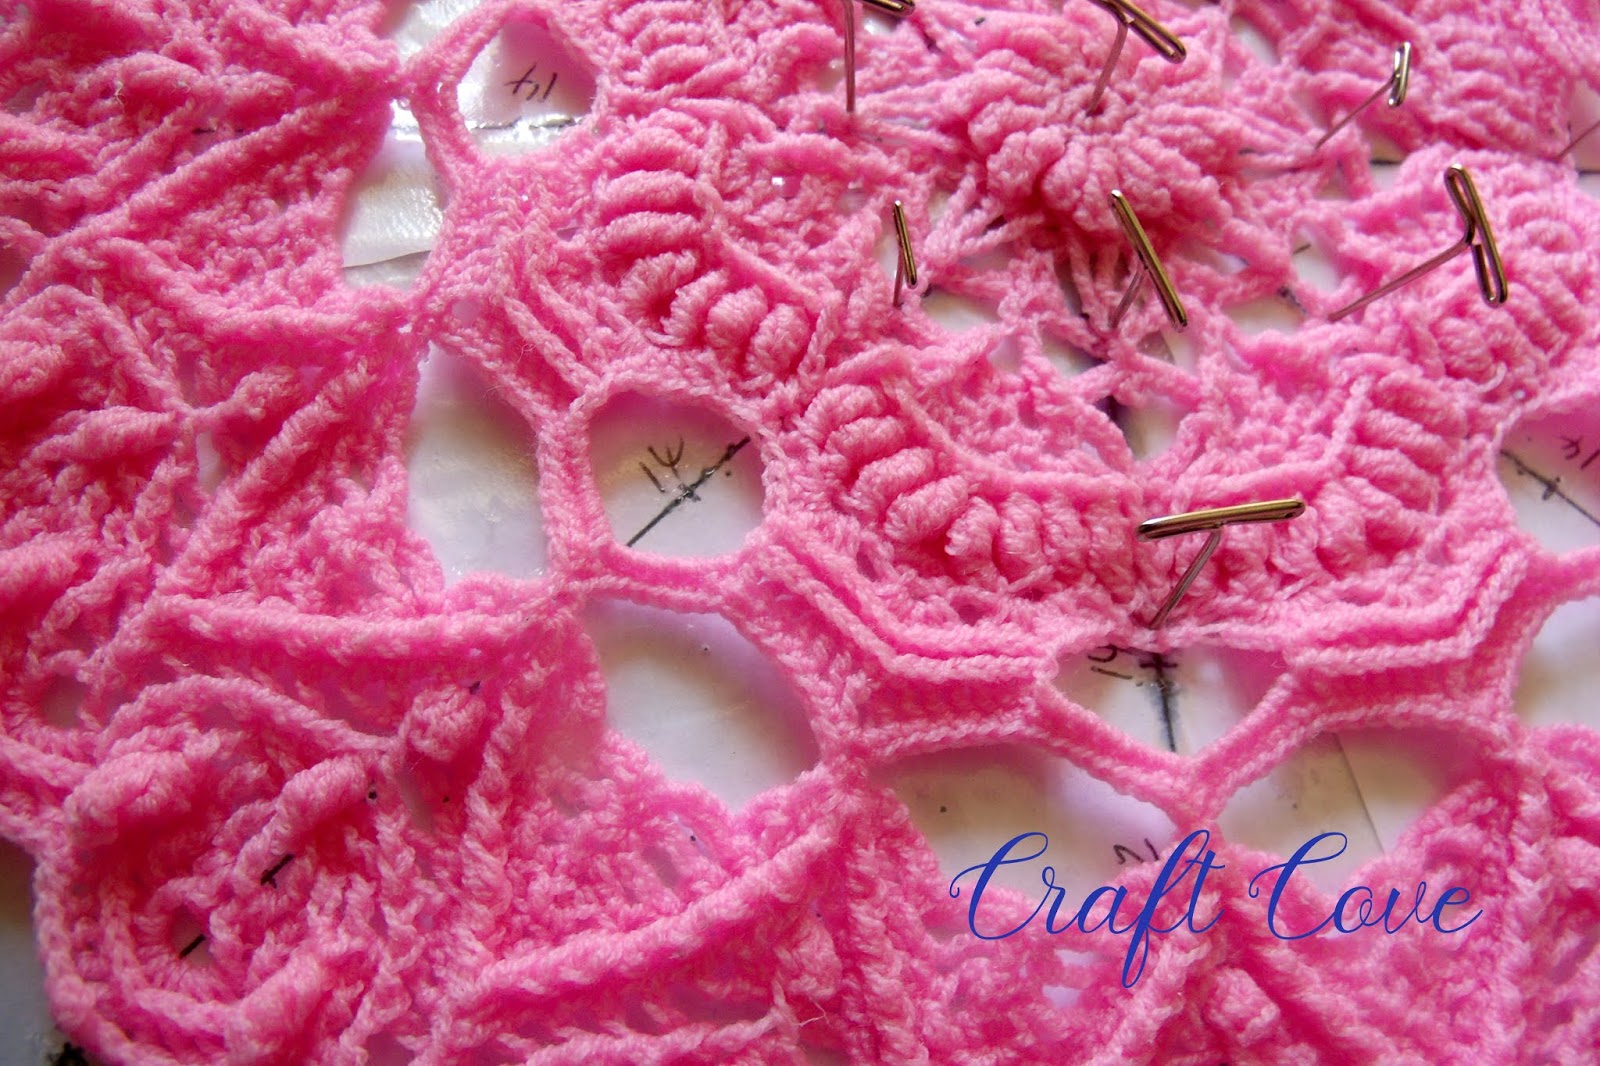 Craft Cove Blog: Crochet Blocking 101